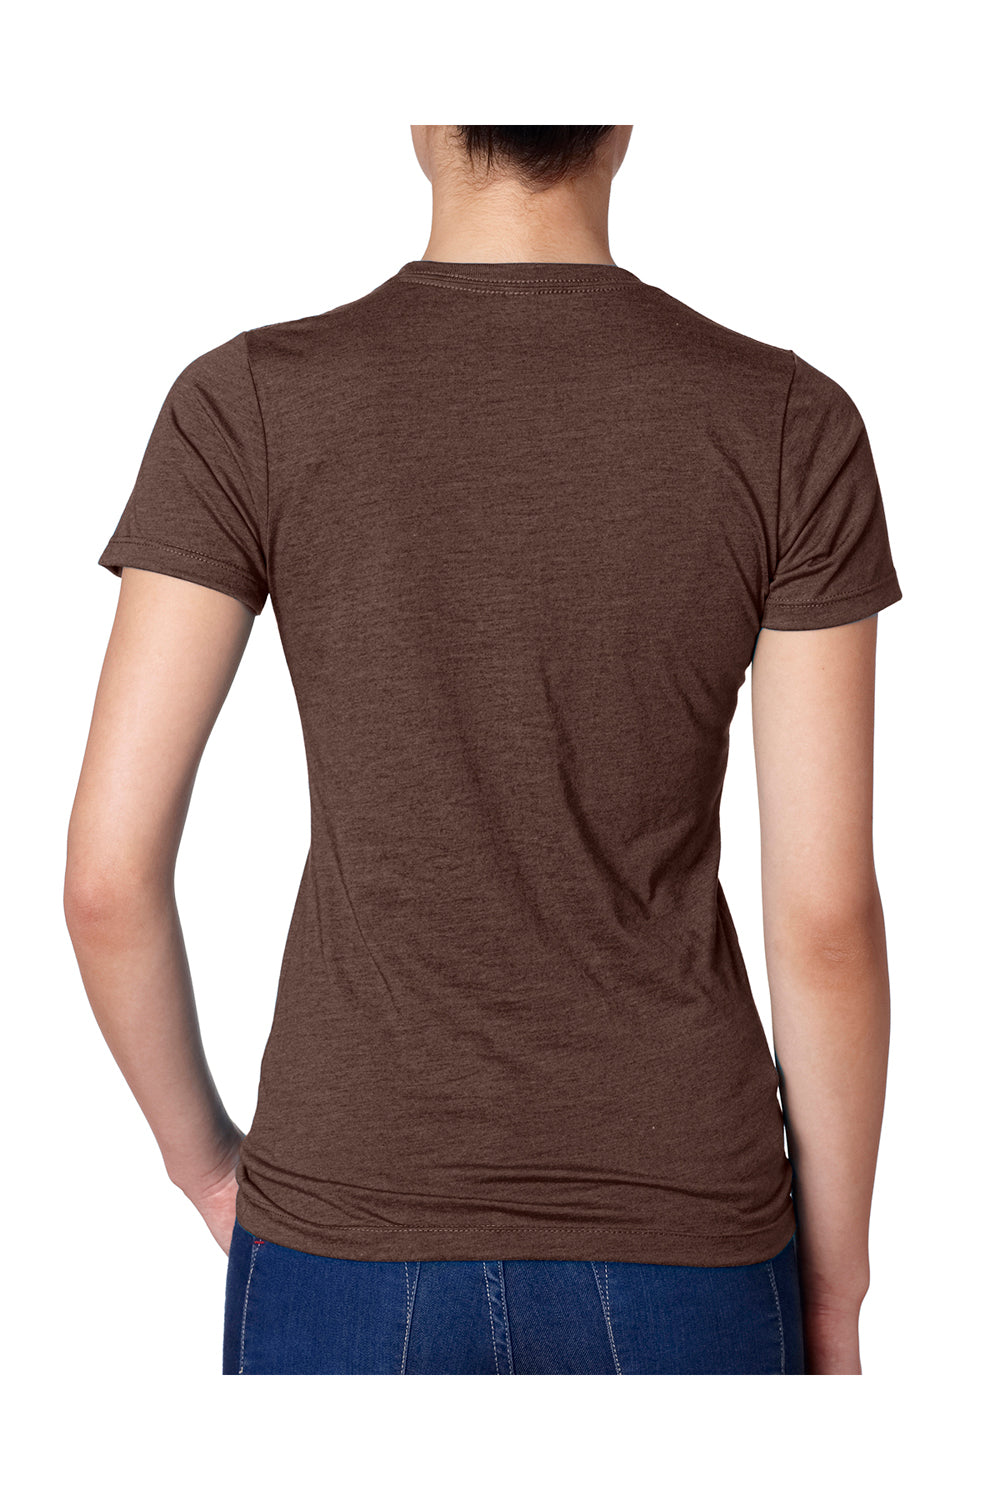 Next Level 6610 Womens CVC Jersey Short Sleeve Crewneck T-Shirt Espresso Brown Back